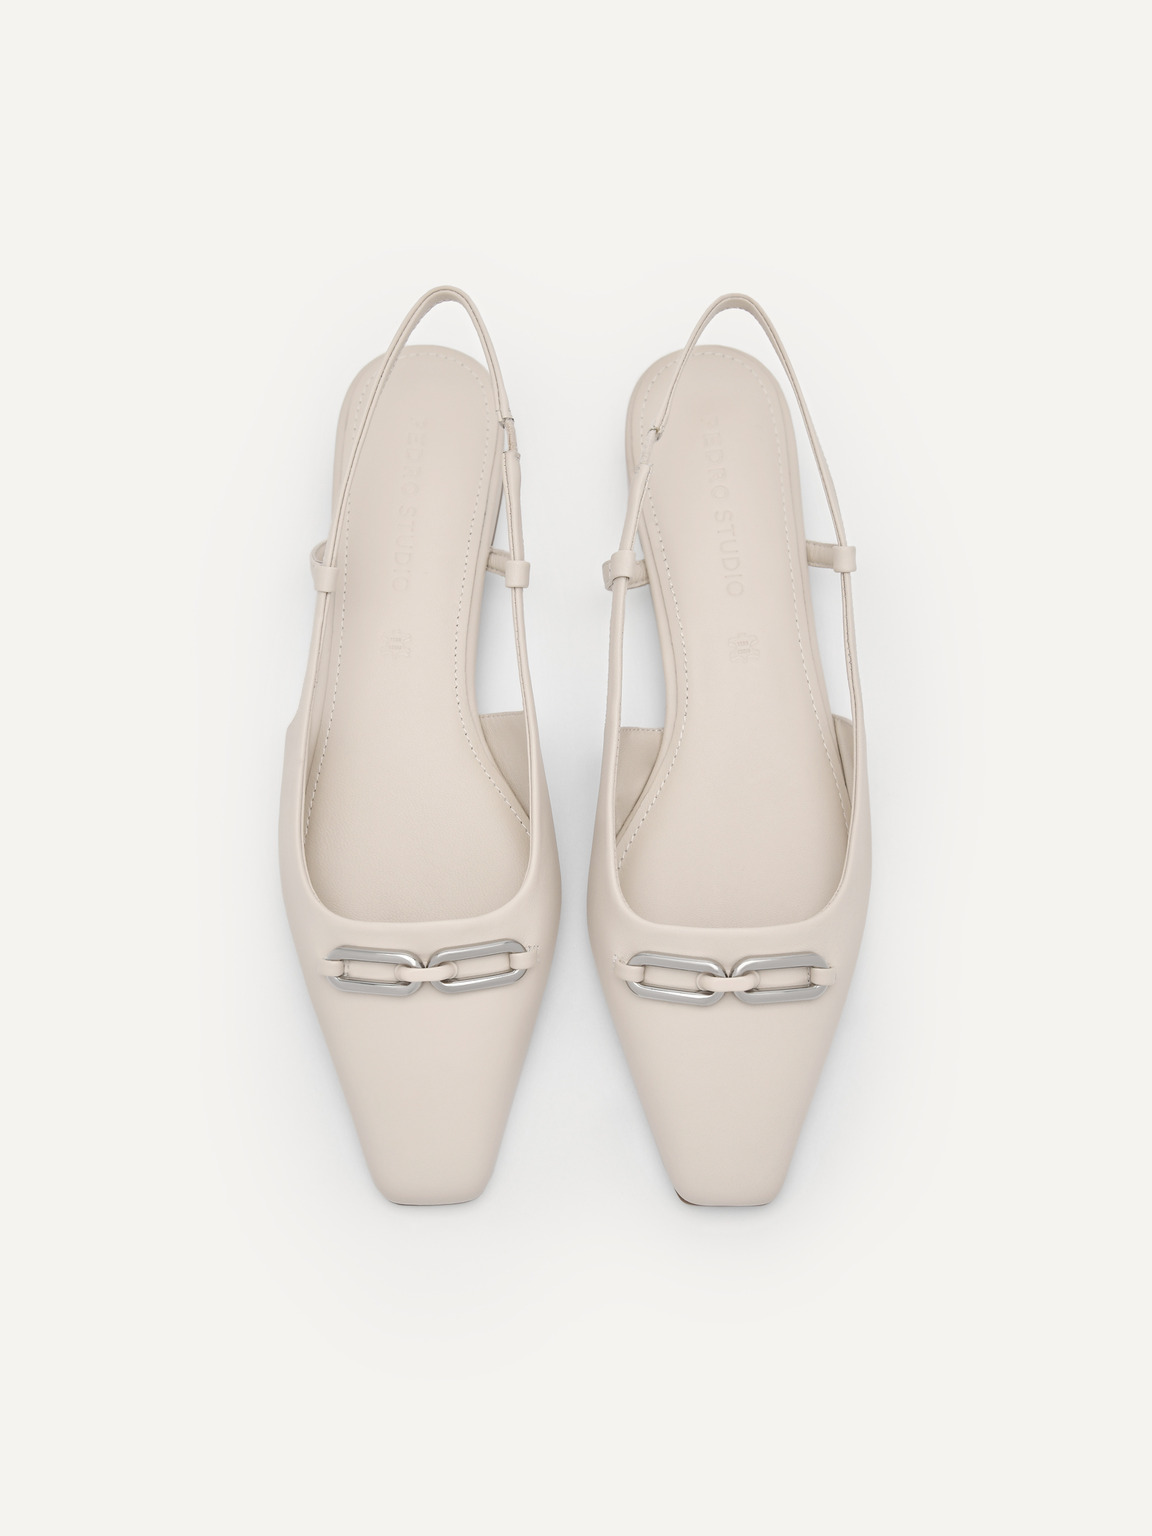 PEDRO工作室Kate皮革芭蕾舞鞋, 奶油色